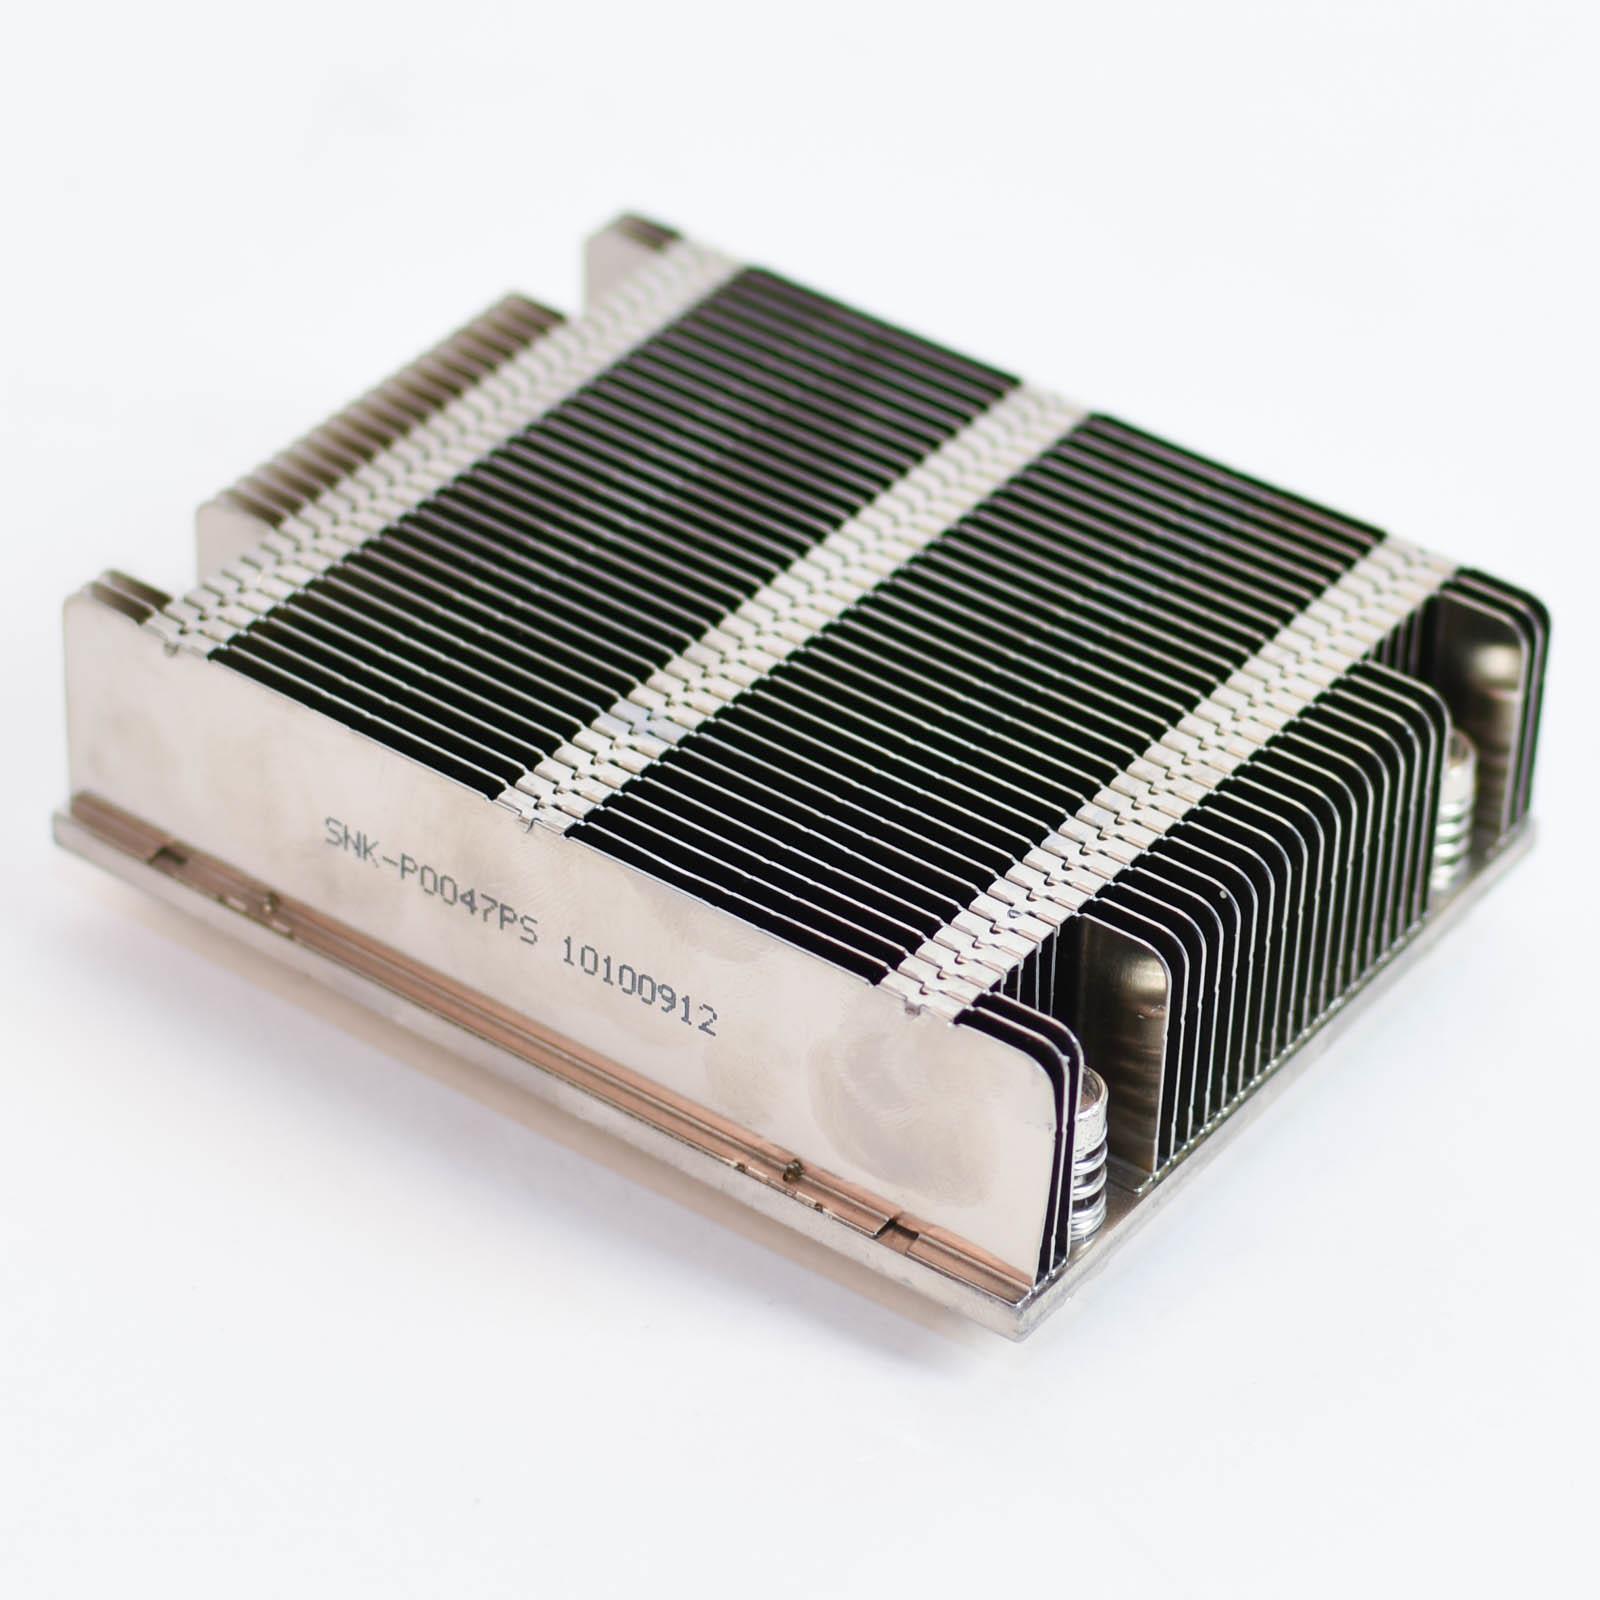 Supermicro SNK-P0047PS 1U Passive Heatsink for CPU Socket LGA2011 Narrow ILM